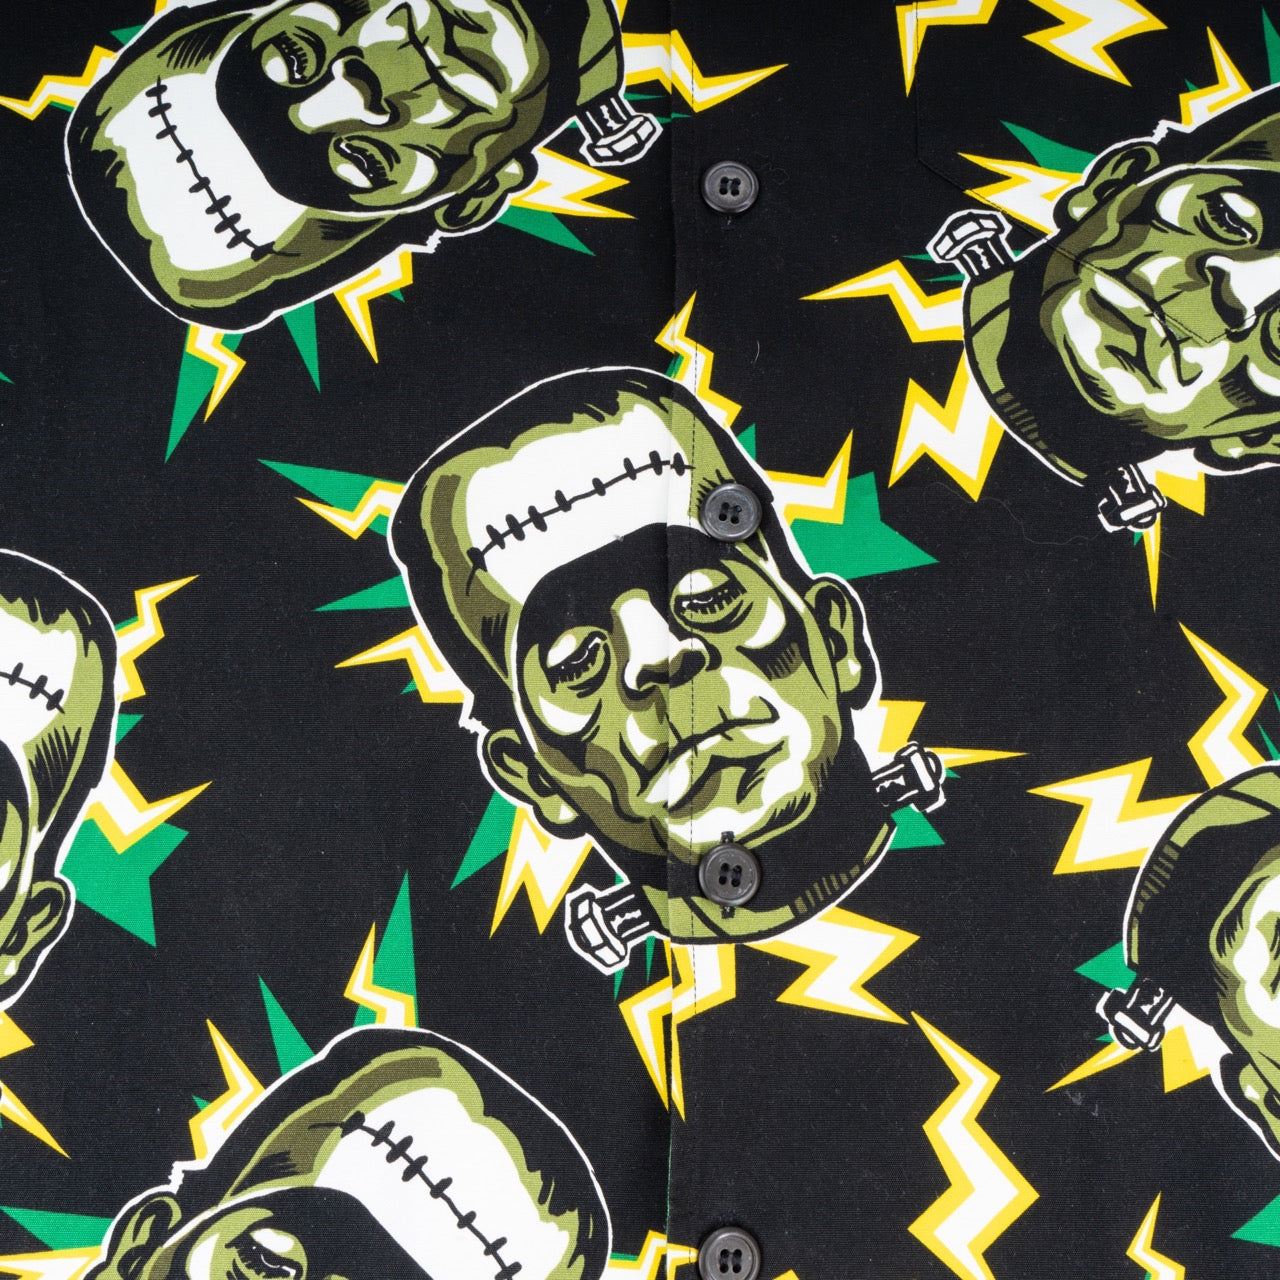 Prada 2018 Frankenstein Lightning Bowling Shirt (L)